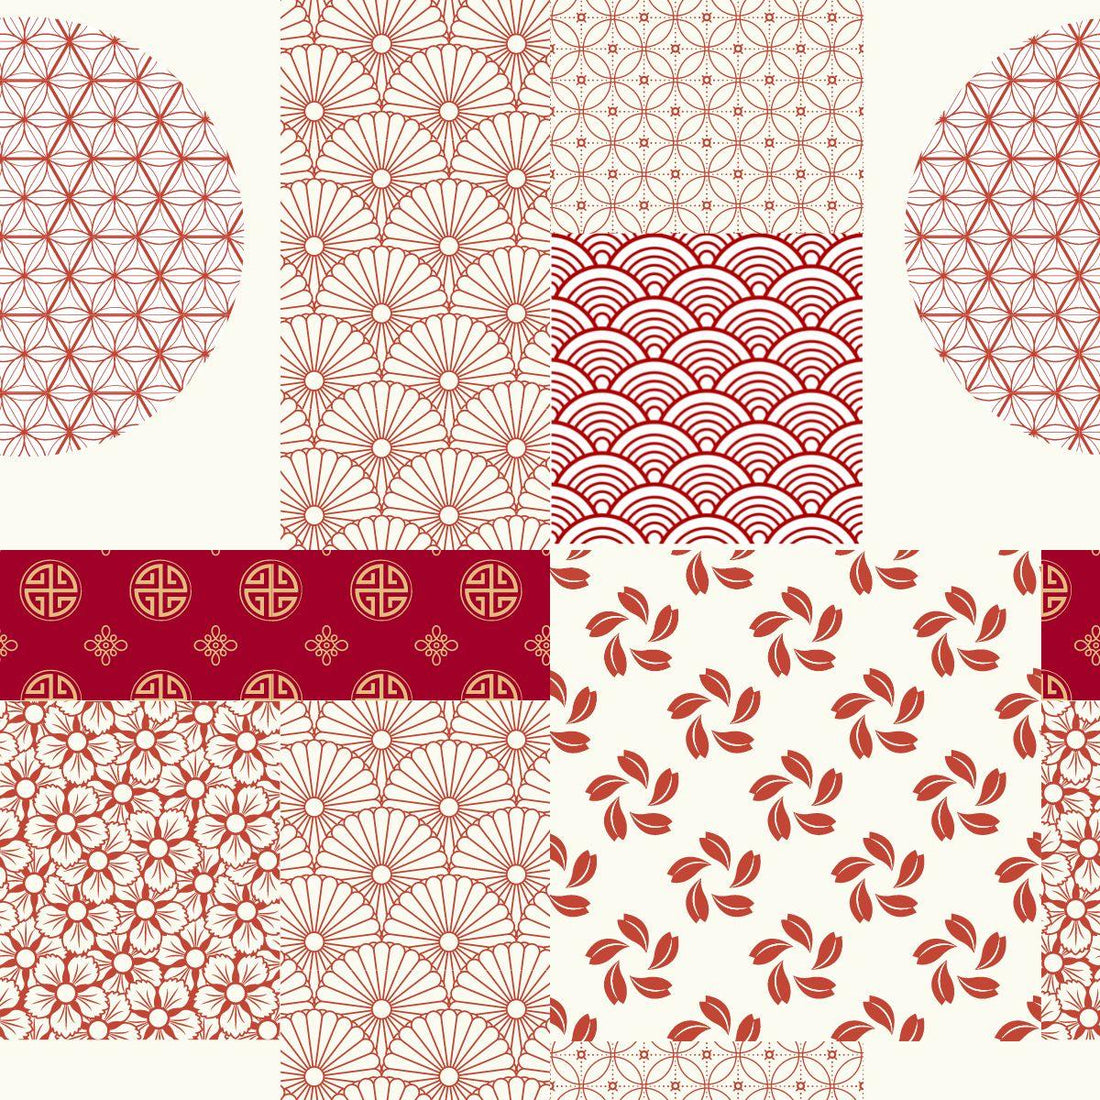 Wagara or the traditional Japanese Patterns - Kaito Japan Design 